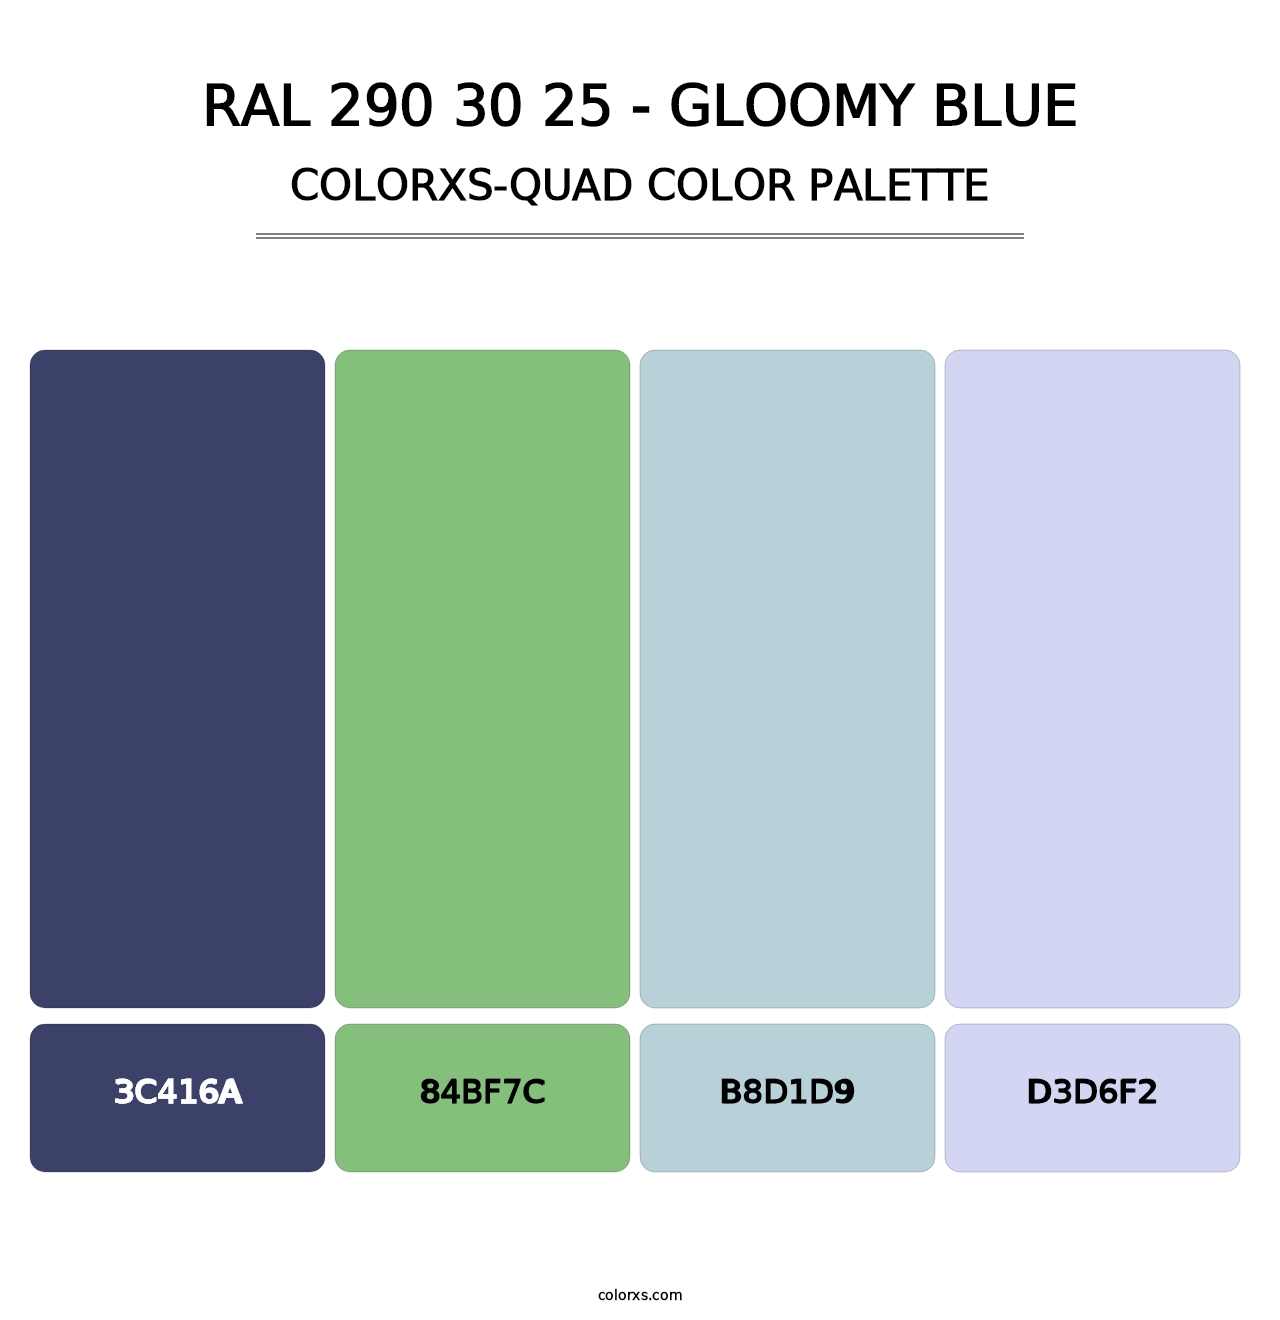 RAL 290 30 25 - Gloomy Blue - Colorxs Quad Palette